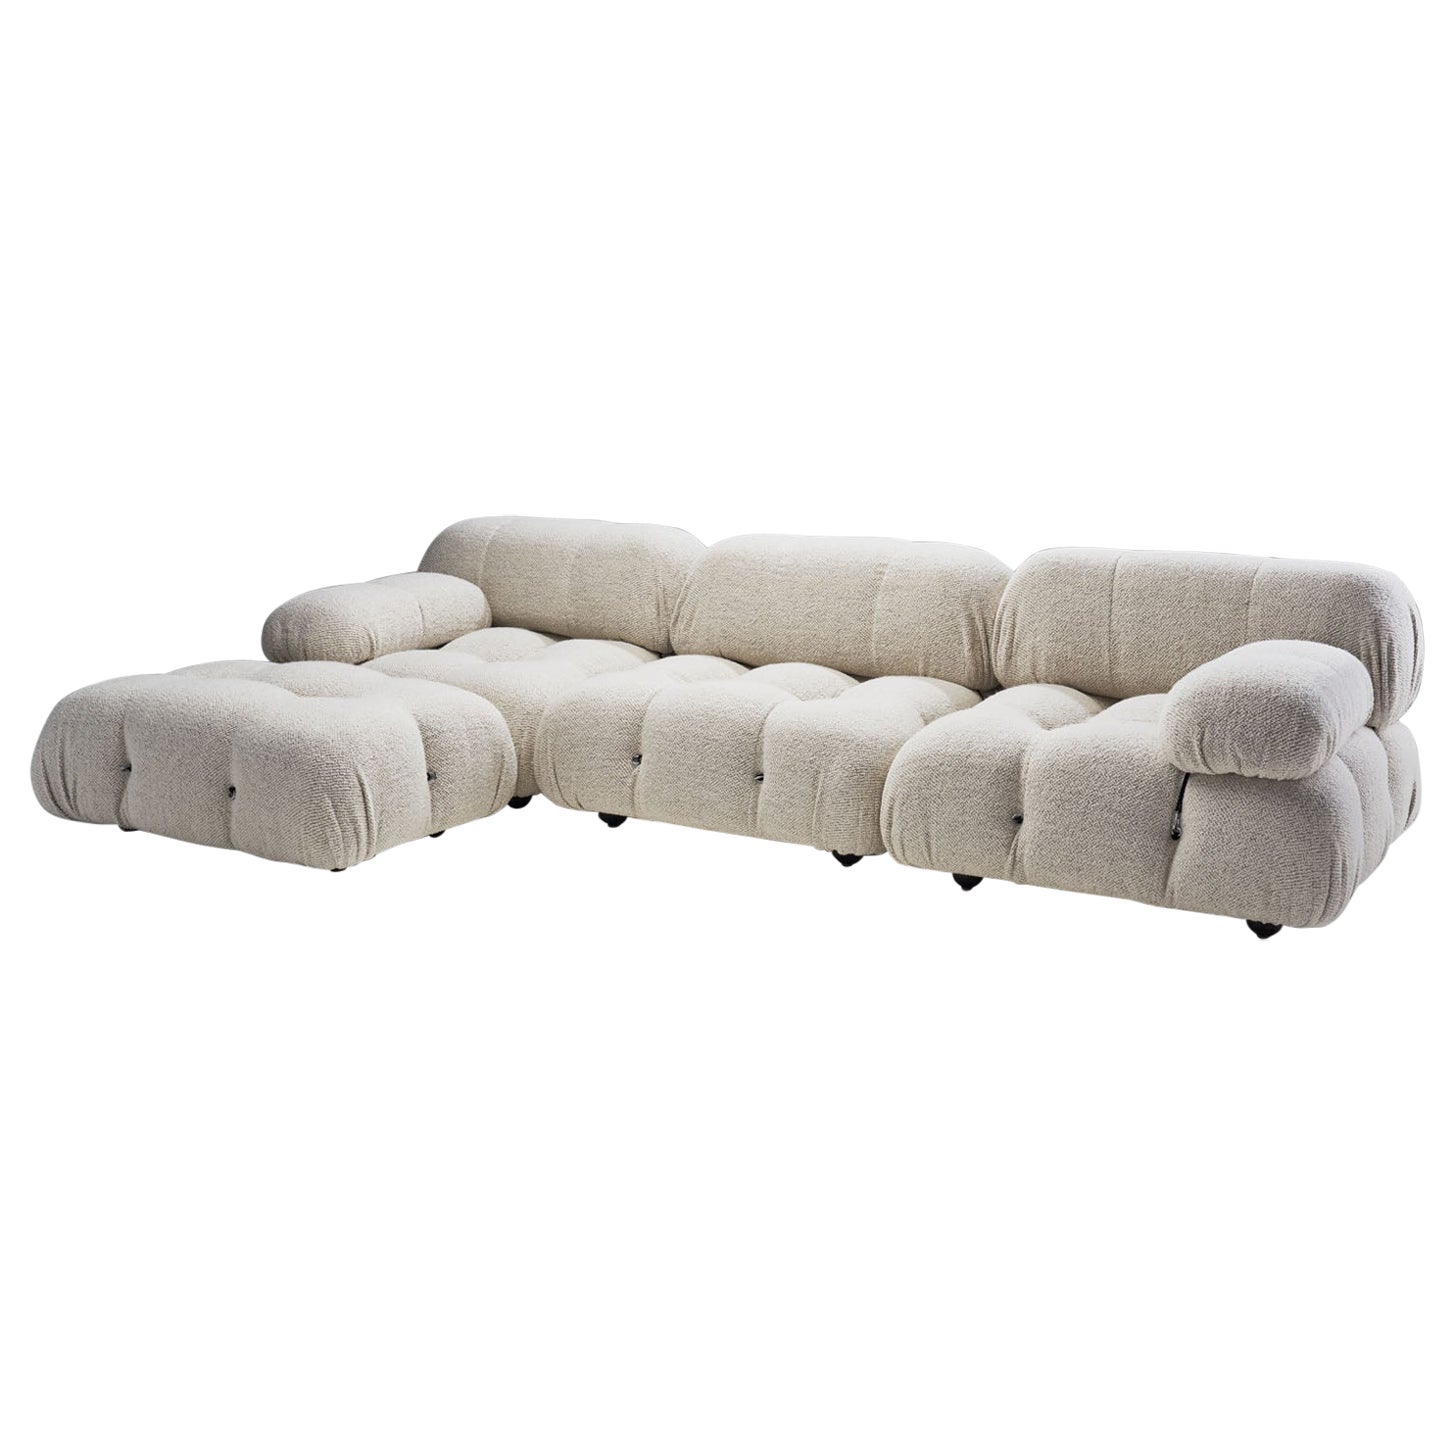 Ivory “Camaleonda” Modular Sofa in 4 Segments by Mario Bellini, Italy 1971  For Sale at 1stDibs | mario bellini sofa 1971, couch with multiple segments